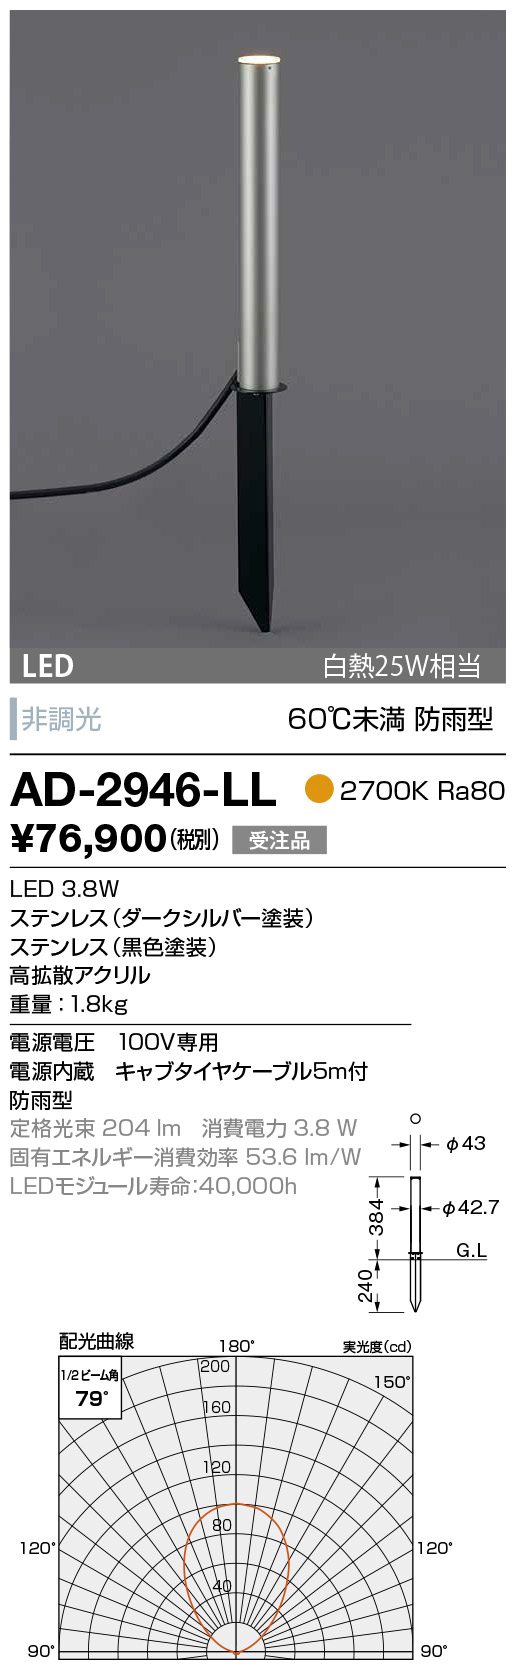 AD-2946-LL 山田照明 ガーデンライト ダークシルバー LED - 1